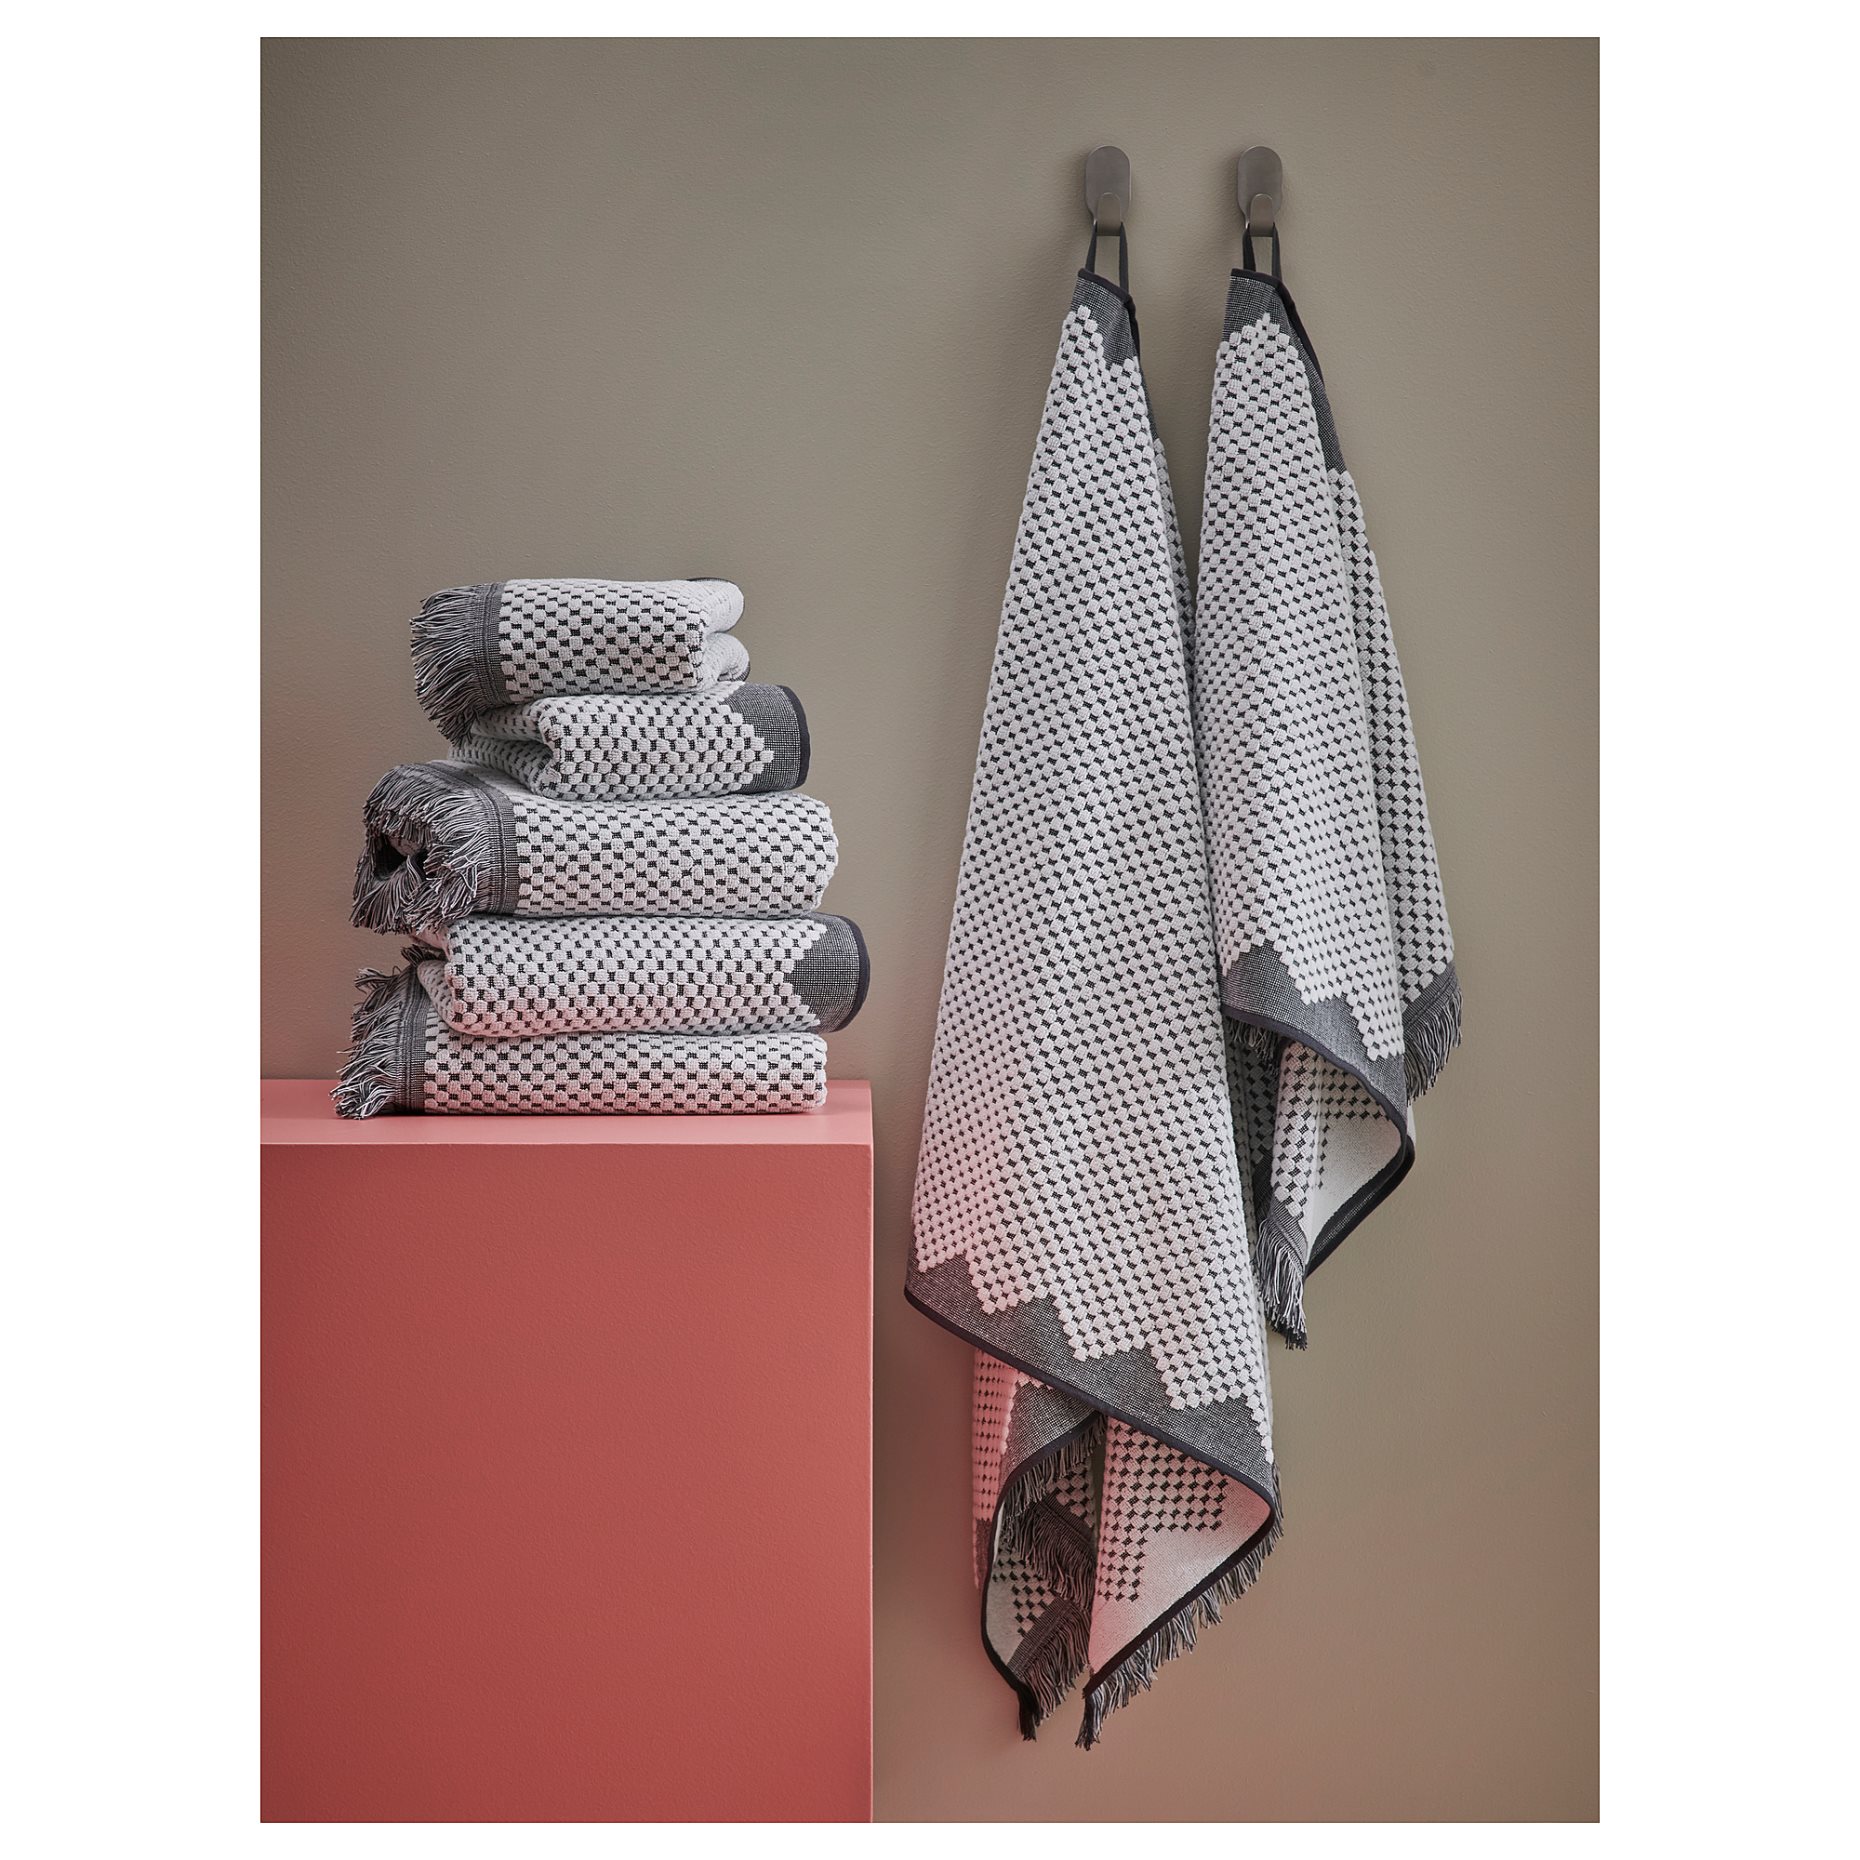 FJALLSTARR, bath towel, 70x140 cm, 905.712.17